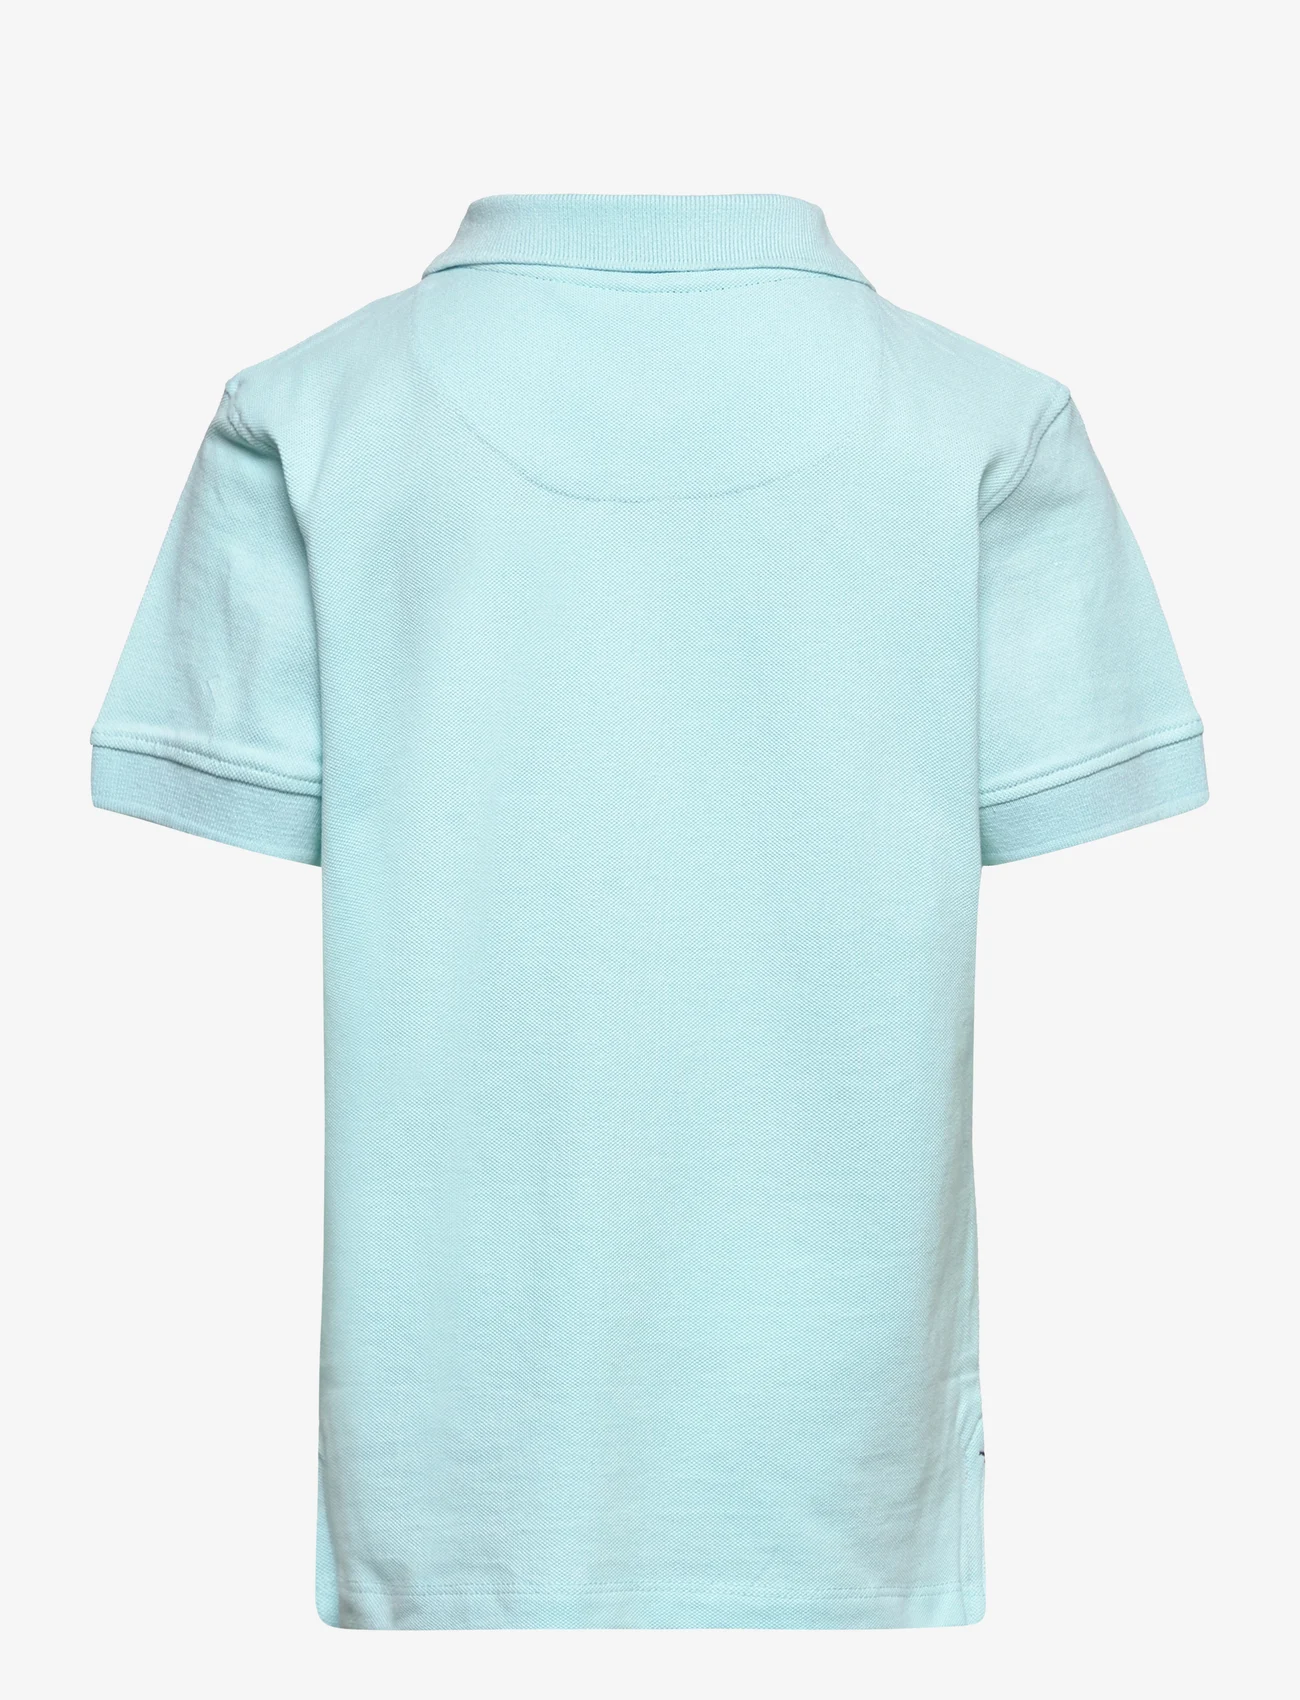 ebbe Kids - Nino Pique Tee - short-sleeved - 0757 light turquoise - 1